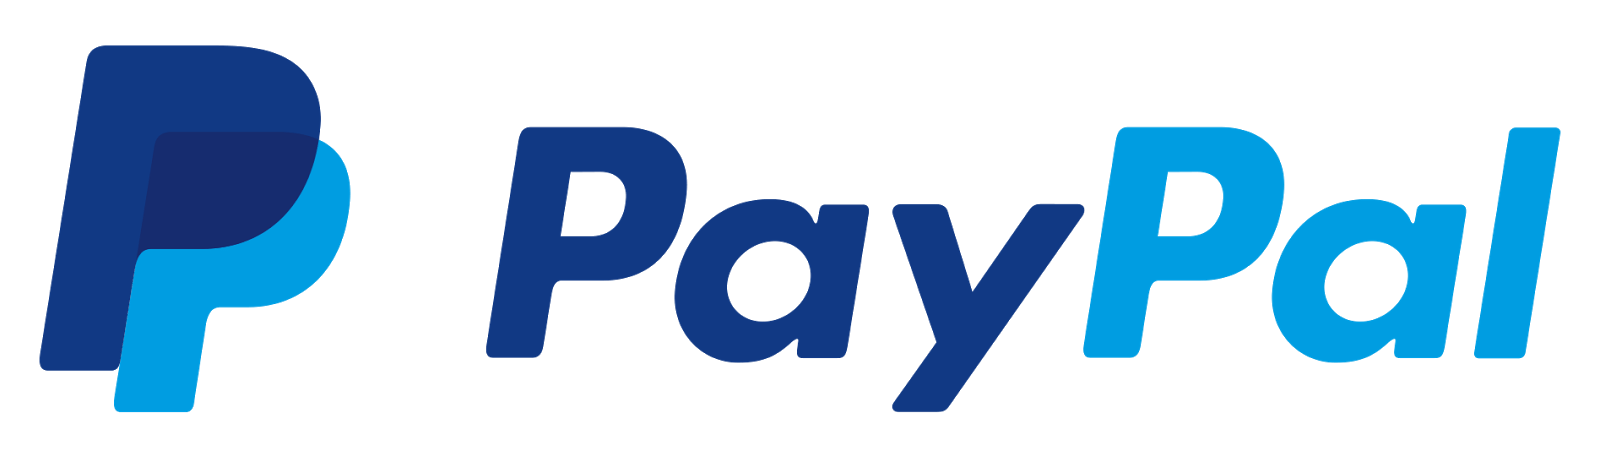 Fake PayPal Logo - PayPal Review 2019 | Reviews, Ratings, Complaints, Comparisons